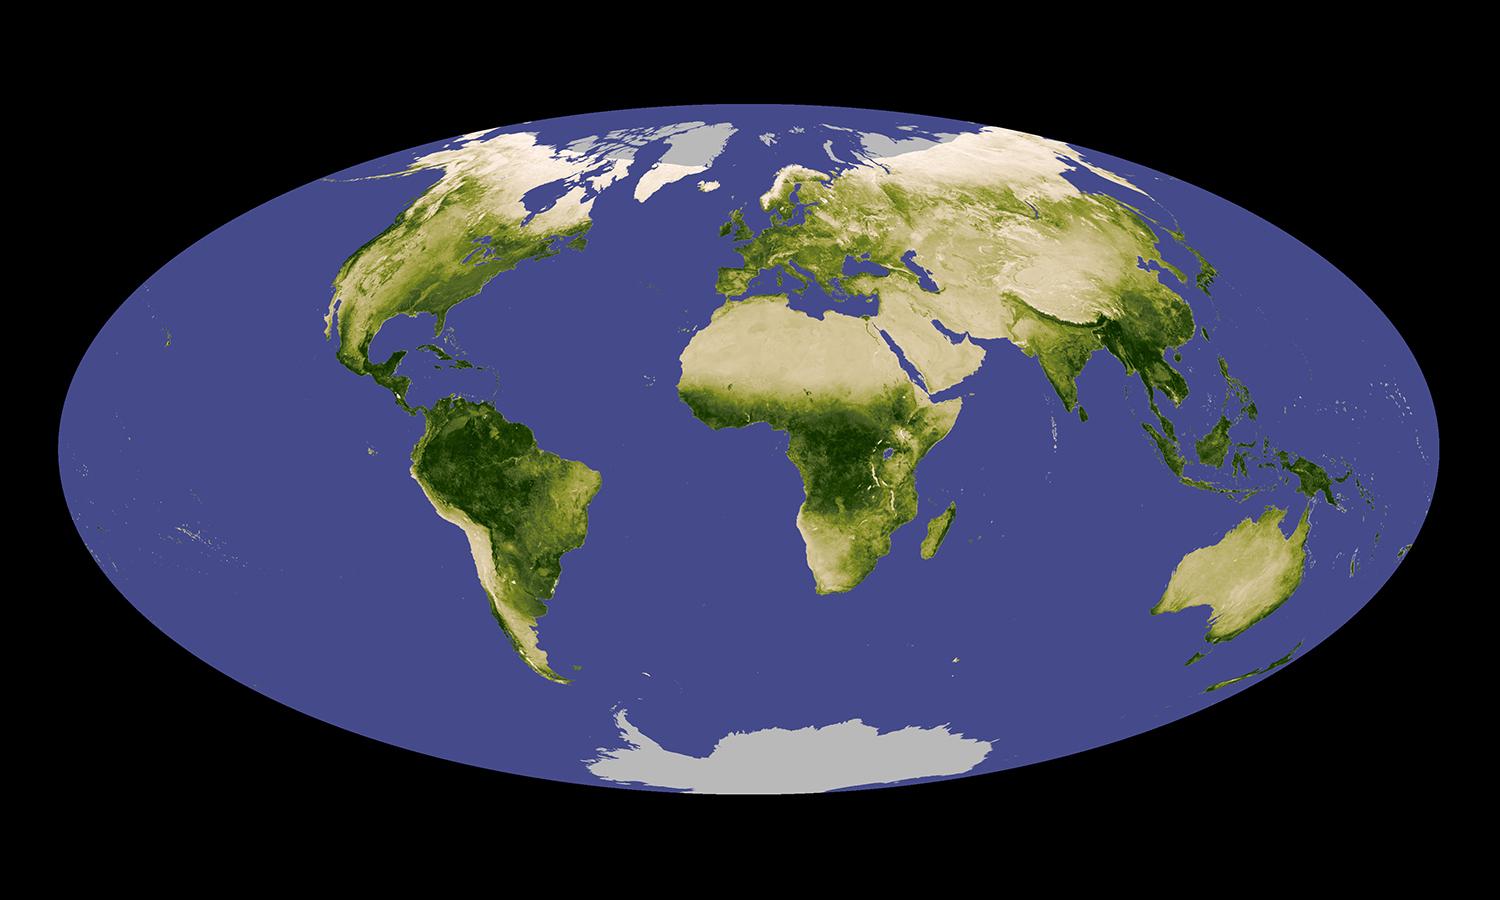 Global vegetation is seen on a satellite image